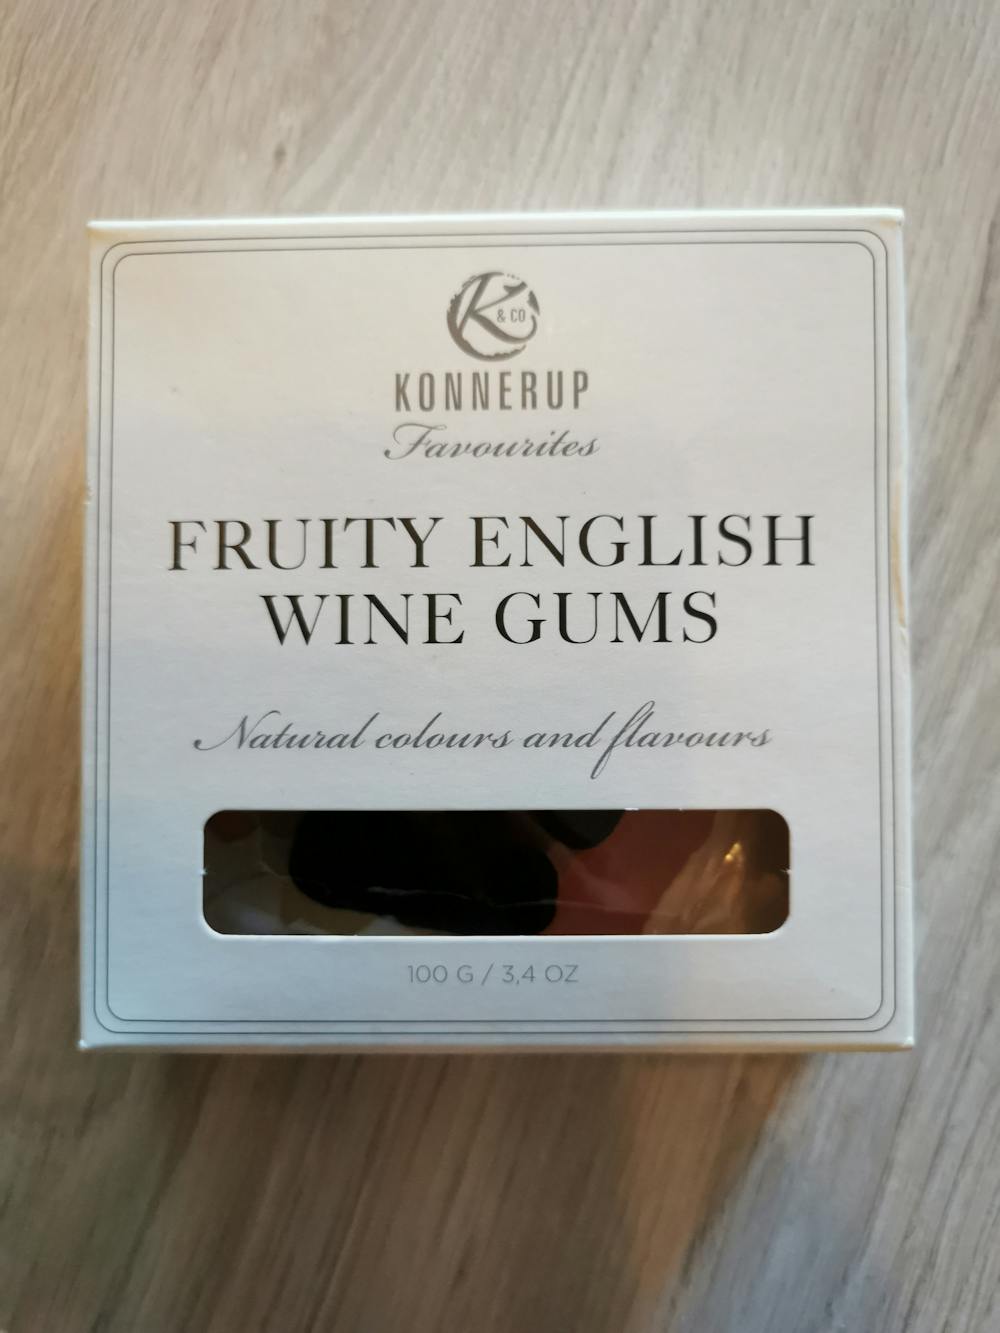 Fruity English wine gums, Konnerup